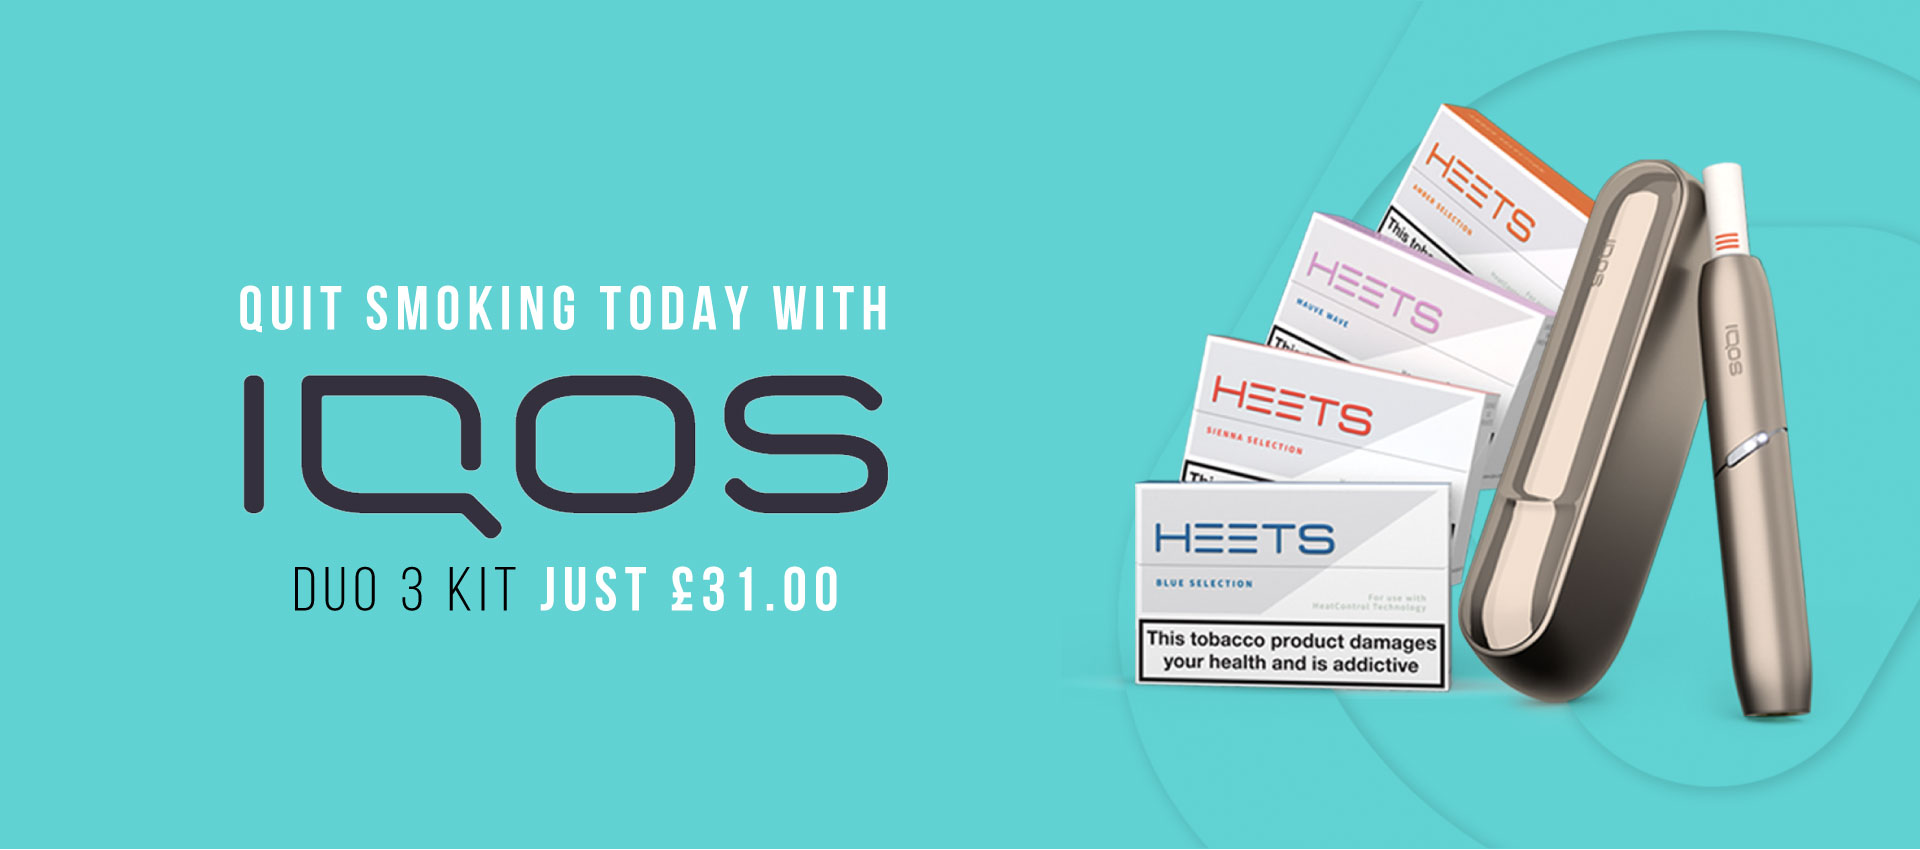 IQOS 3 Duo Starter Kit £31.00 | HEETS £5.00! | Heat Not Burn